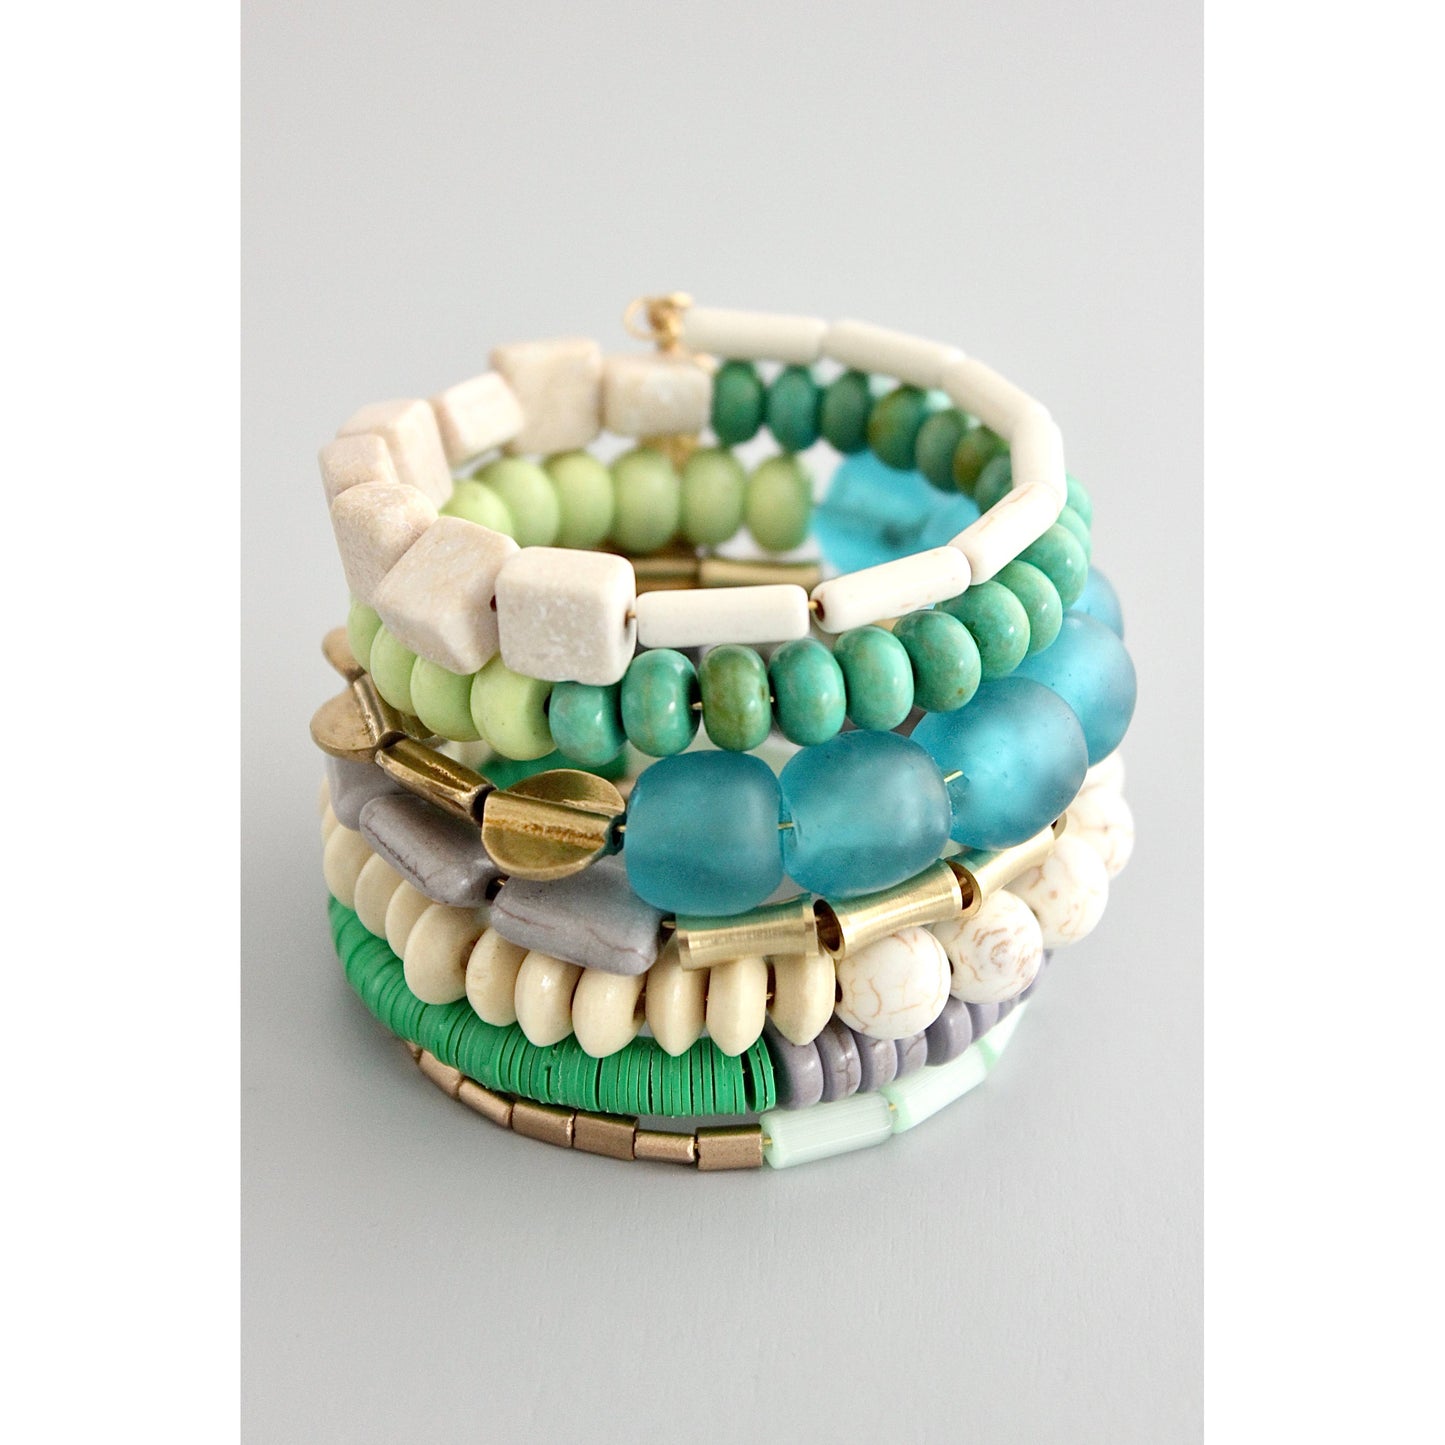 Aqua, Green, Gray, and White Wrap Bracelet